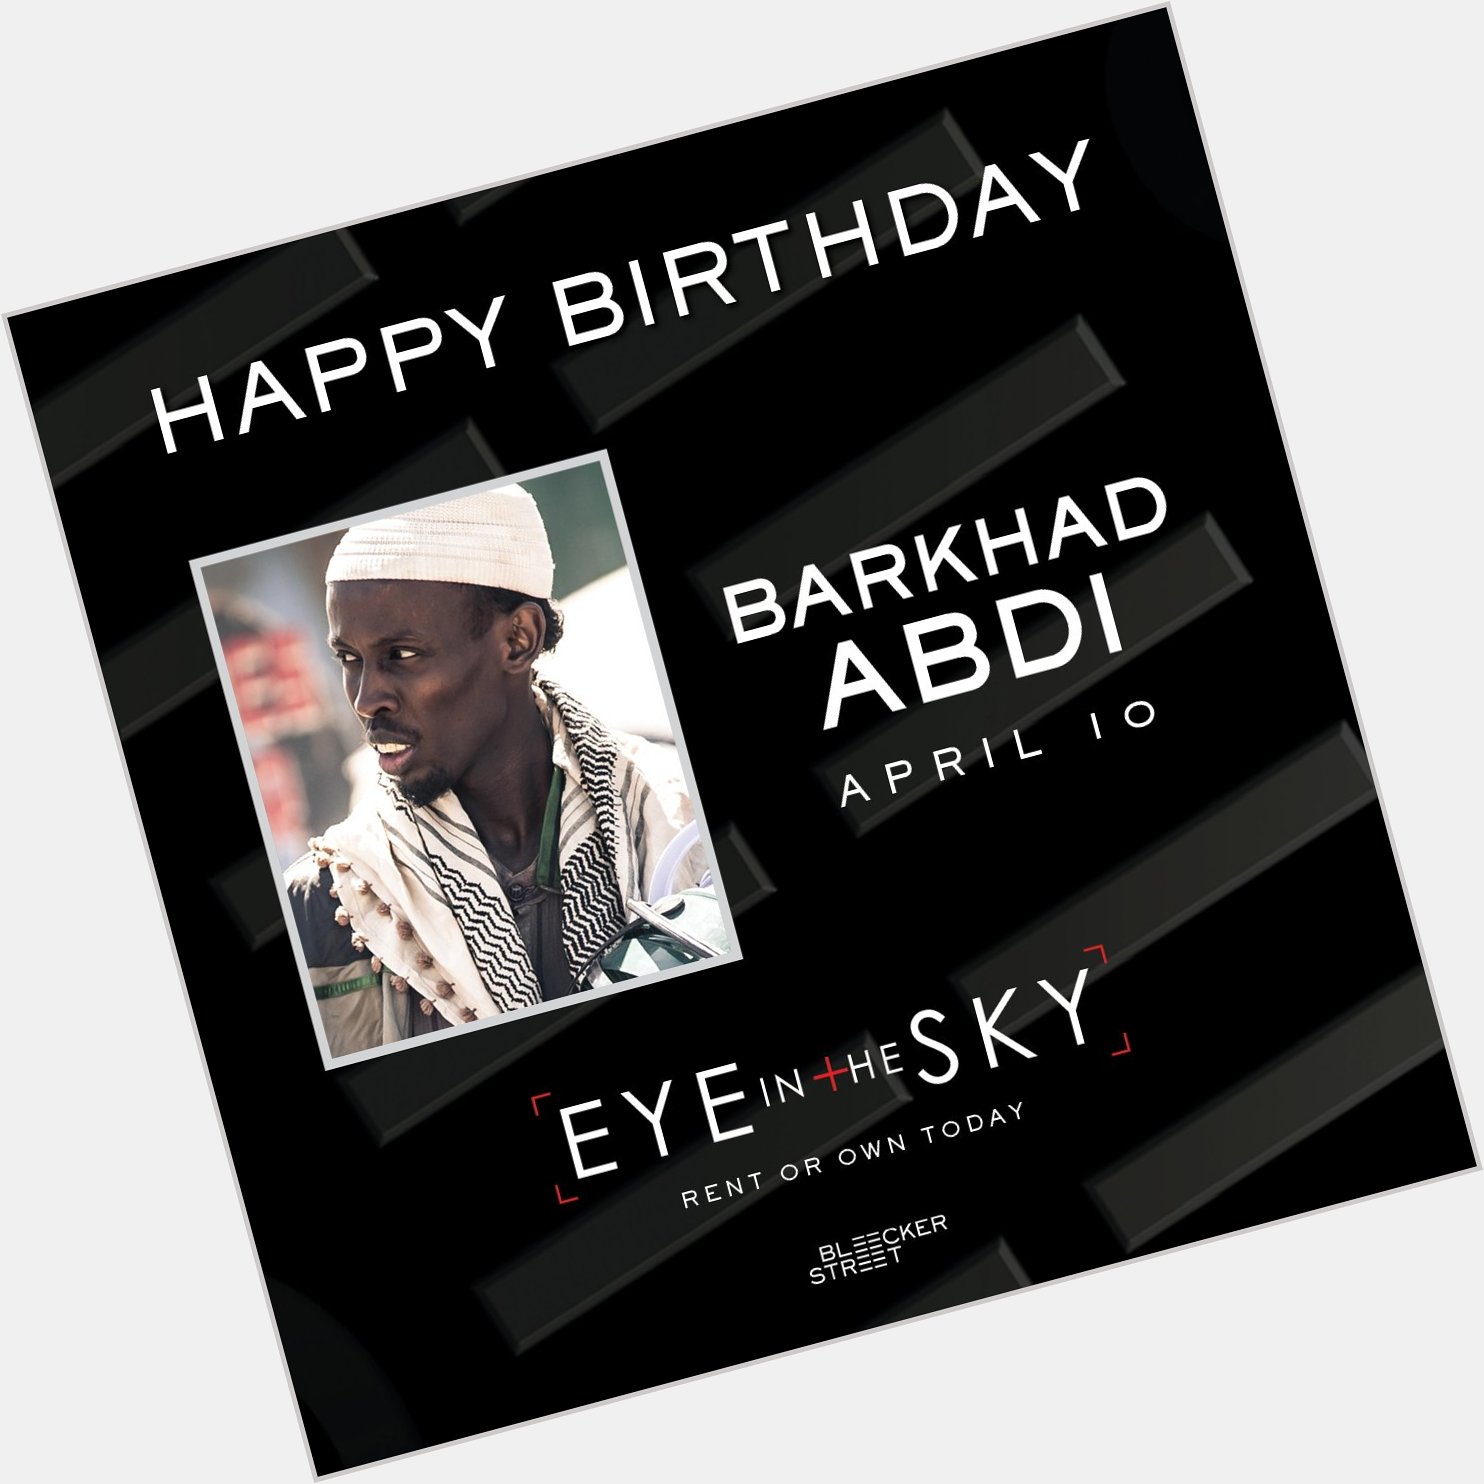 Happy Birthday Barkhad Abdi! Catch him today in 